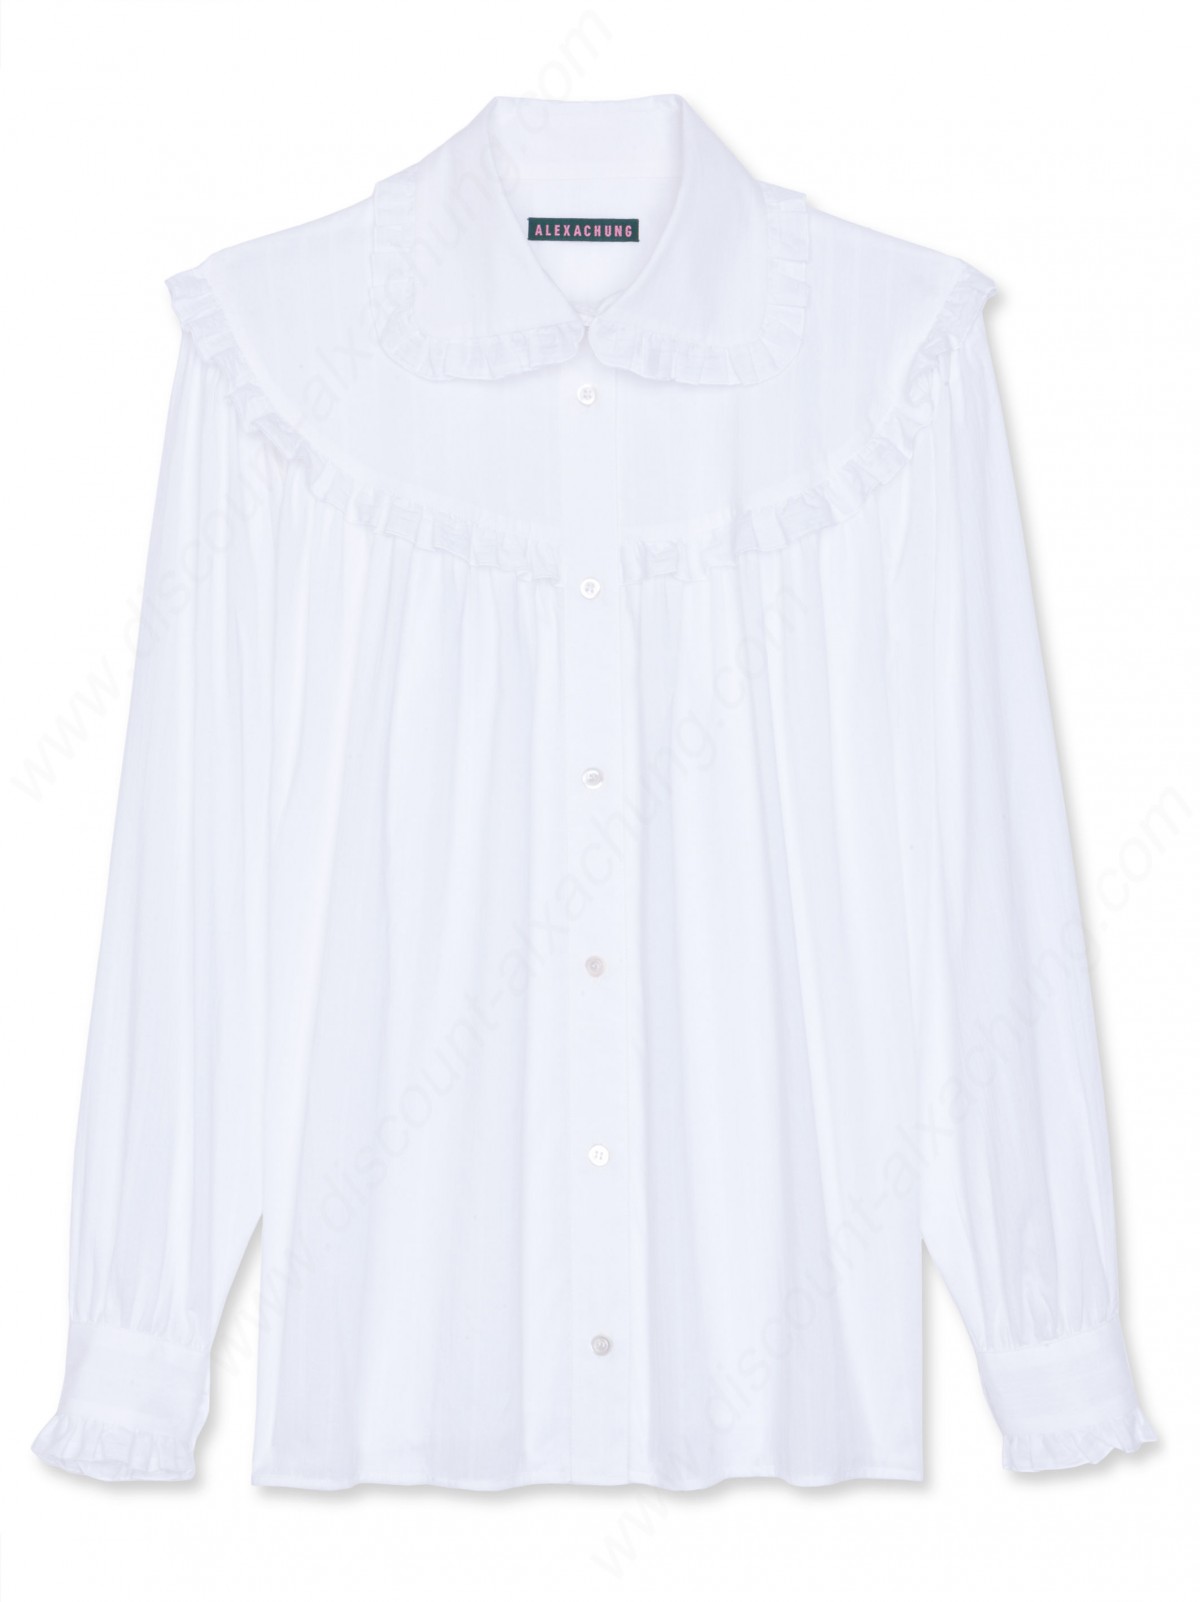 Alexachung White Frill Trim Oversized T-Shirts - -0